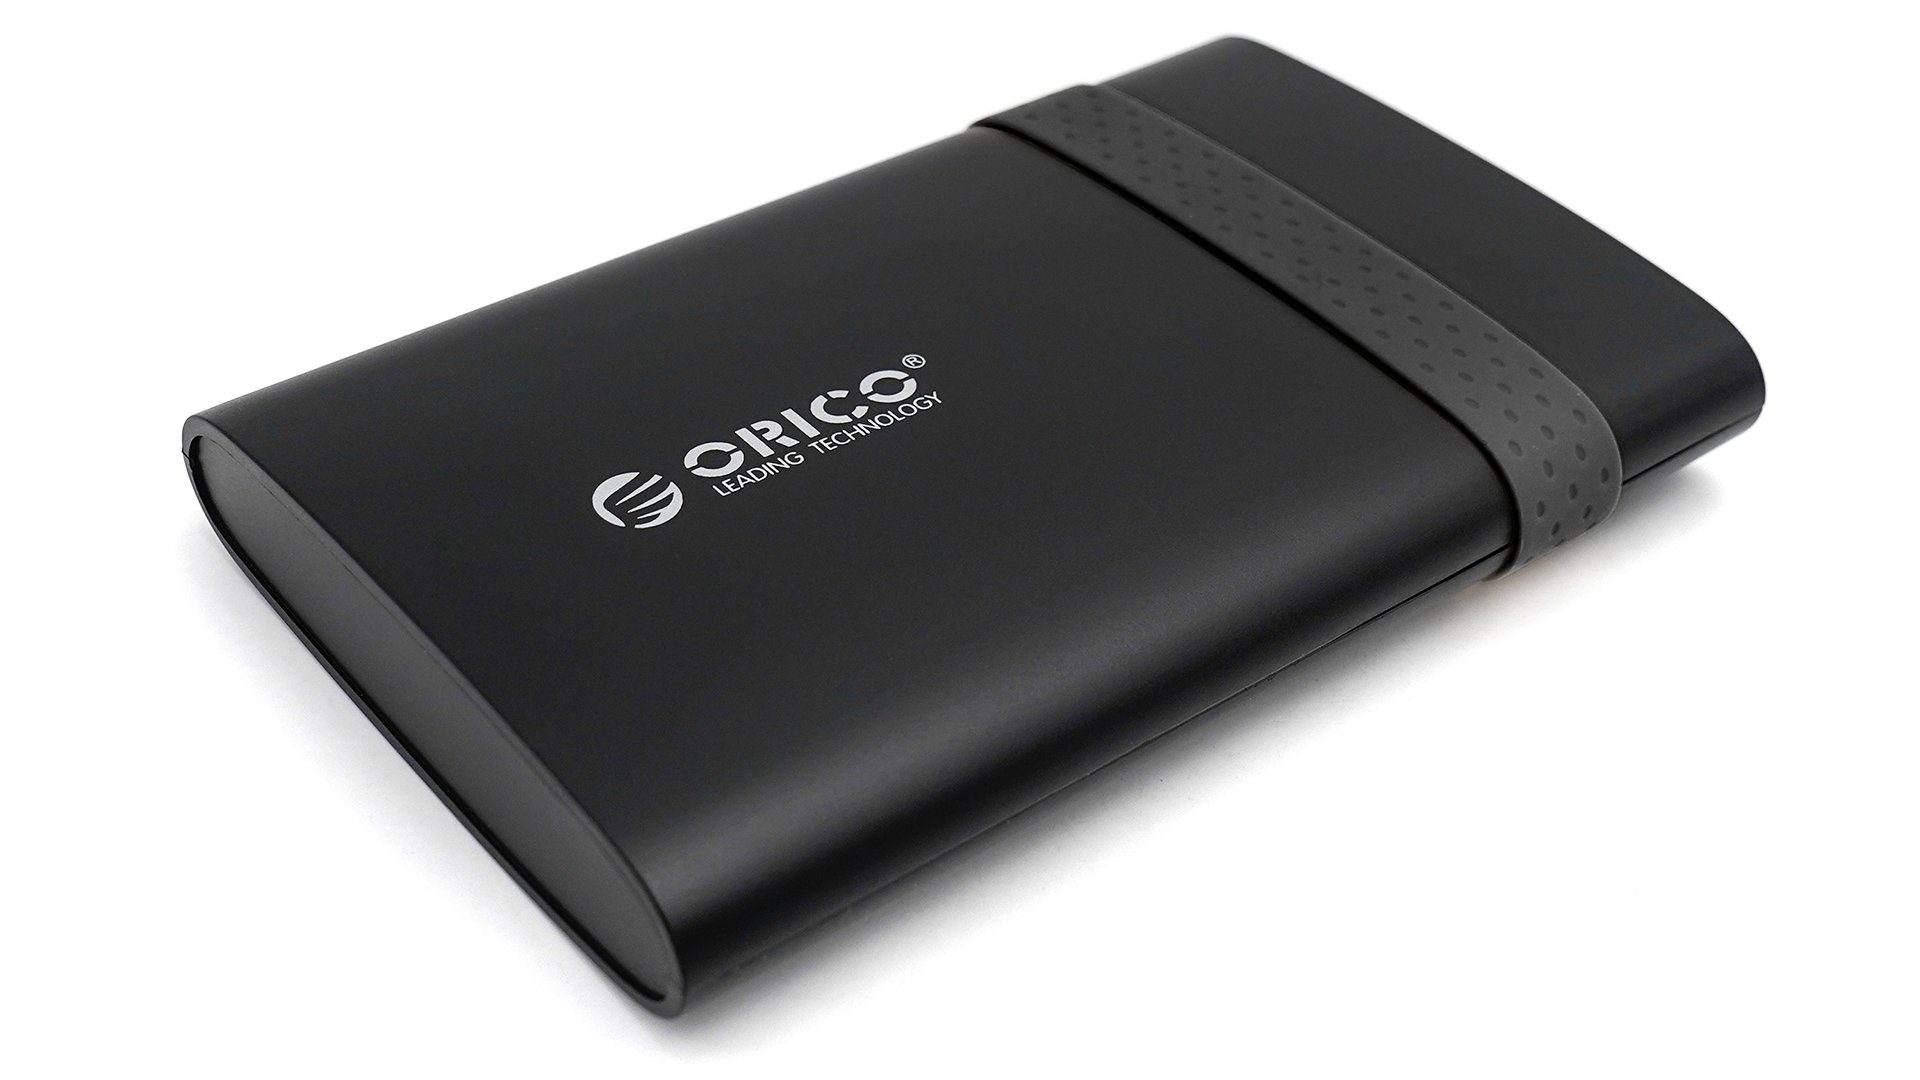 ORICO Orico 300GB USB 3.0 Externe Festplatte 2.5" HDD Tragbare - schwarz externe HDD-Festplatte (300GB) 2.5", für Fotos smart TV PC Mac Laptop Computer ps4 ps5 Xbox